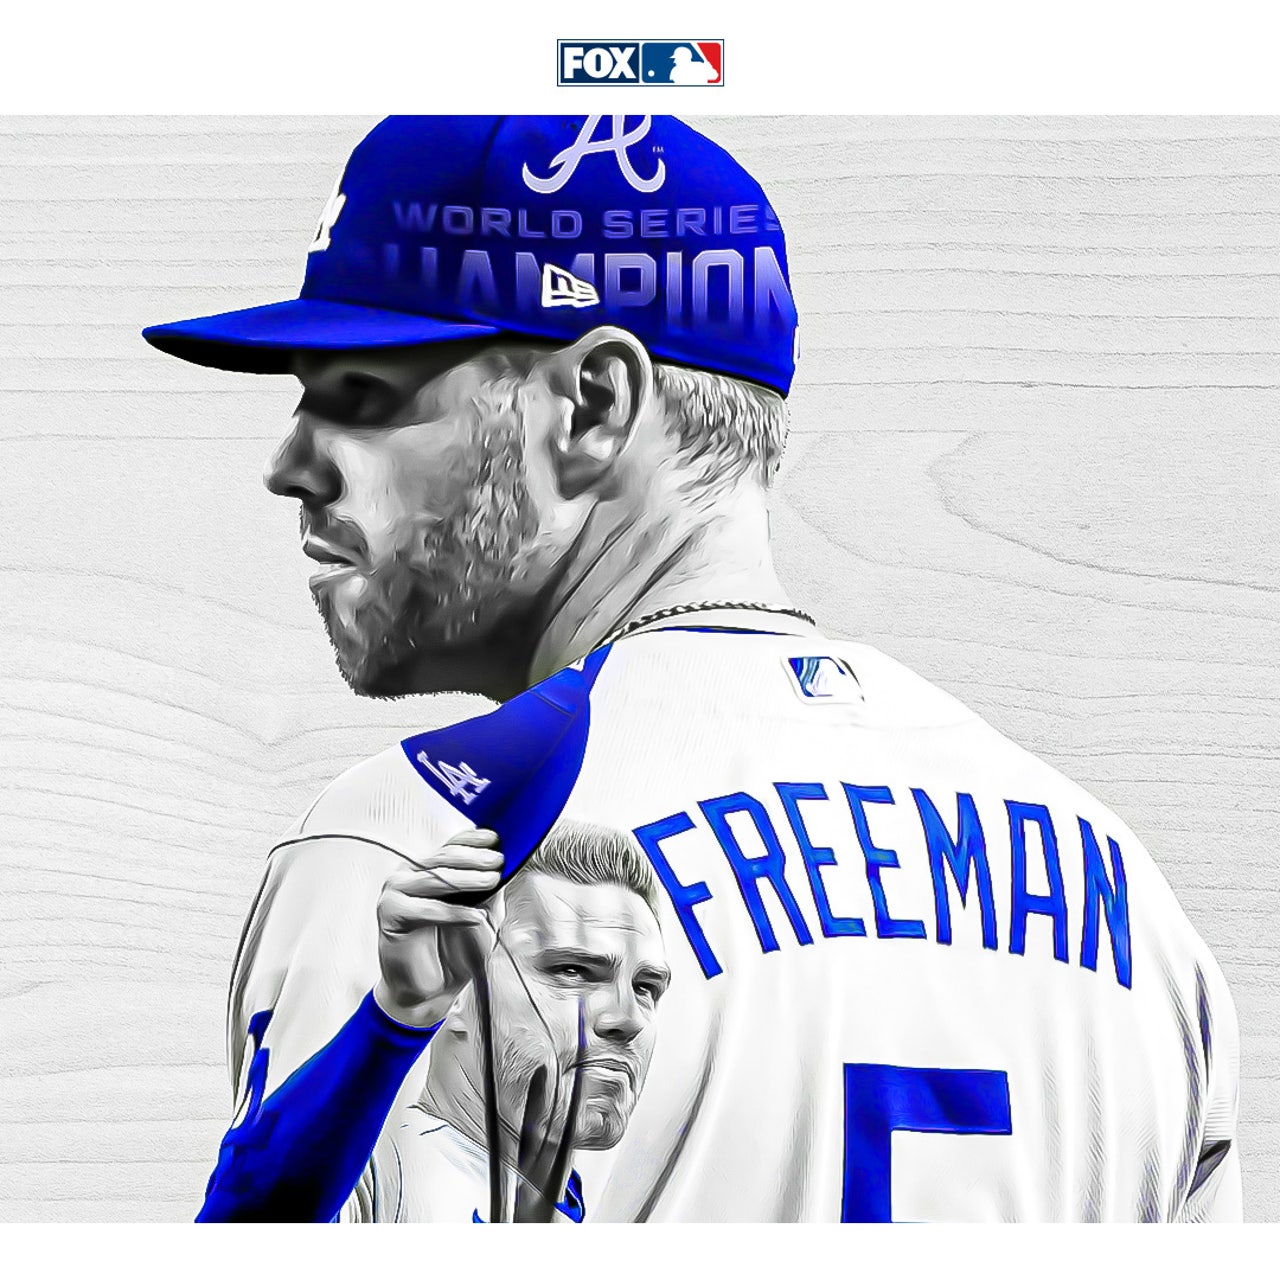 Dodgers' Freddie Freeman's heartfelt MLB All-Star Game thoughts